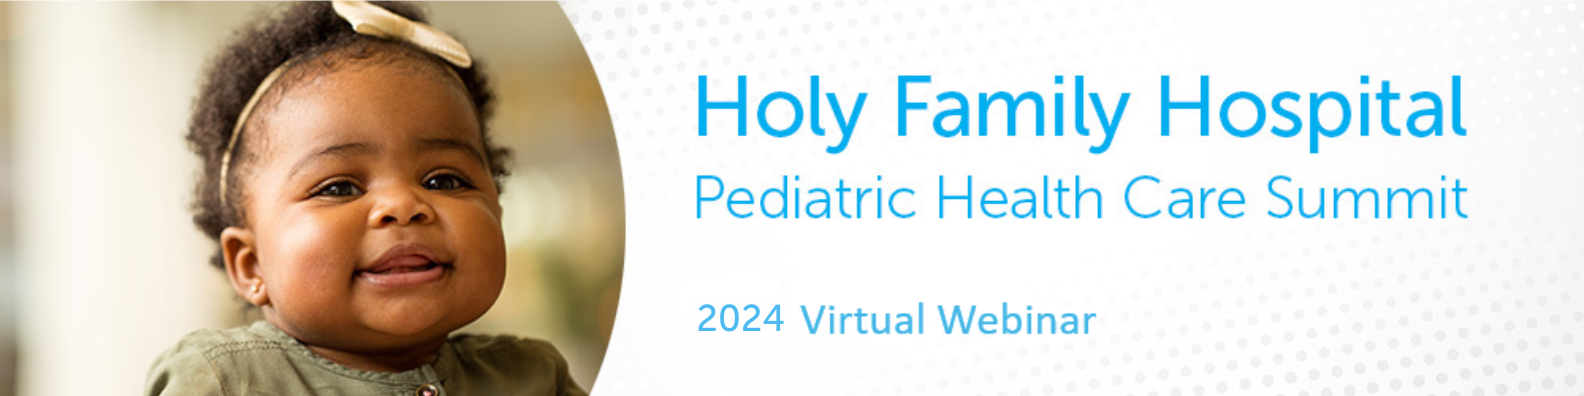 2024 Holy Family Hospital Pediatric Healthcare Summit Banner